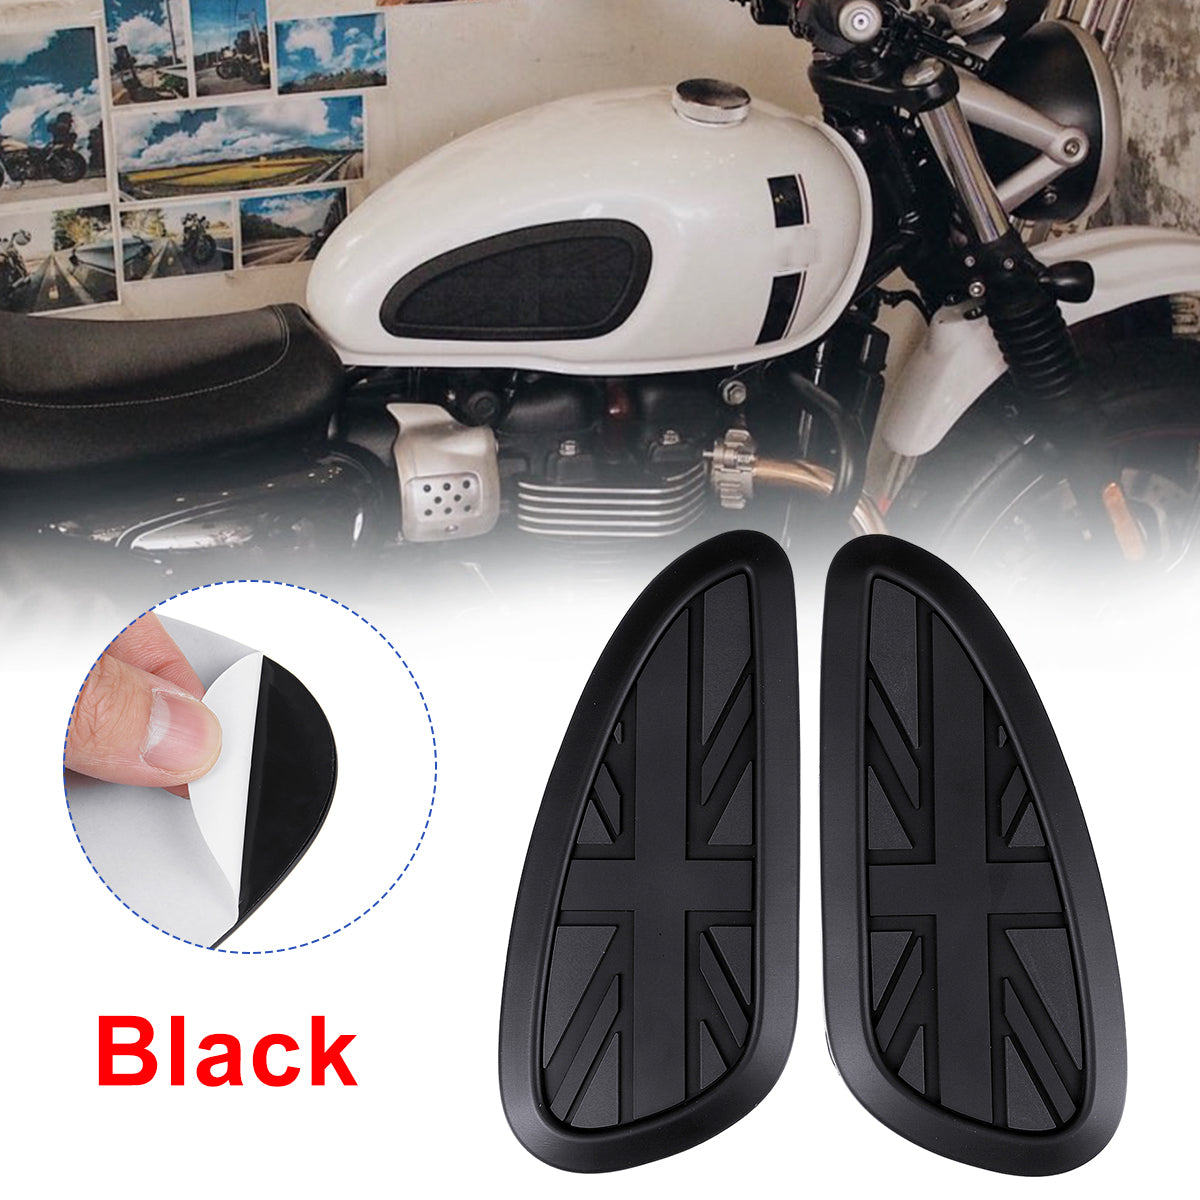 Dark Slate Gray Retro Motorcycle Cafe Racer Gas Fuel tank Rubber Sticker Tank Pad Protector